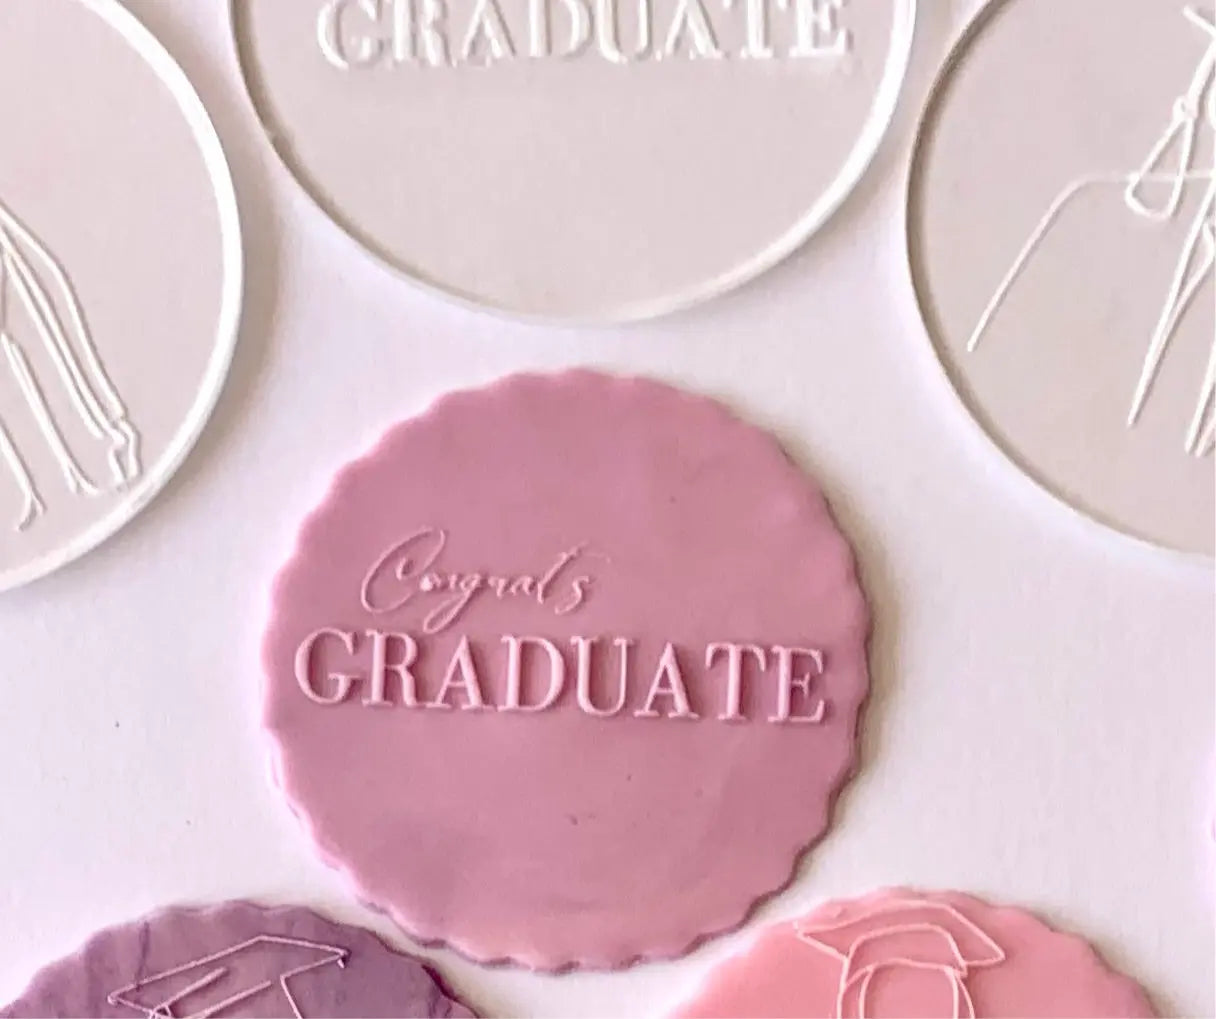 Congrats Graduate - graduation Debossing MEG cookie cutters